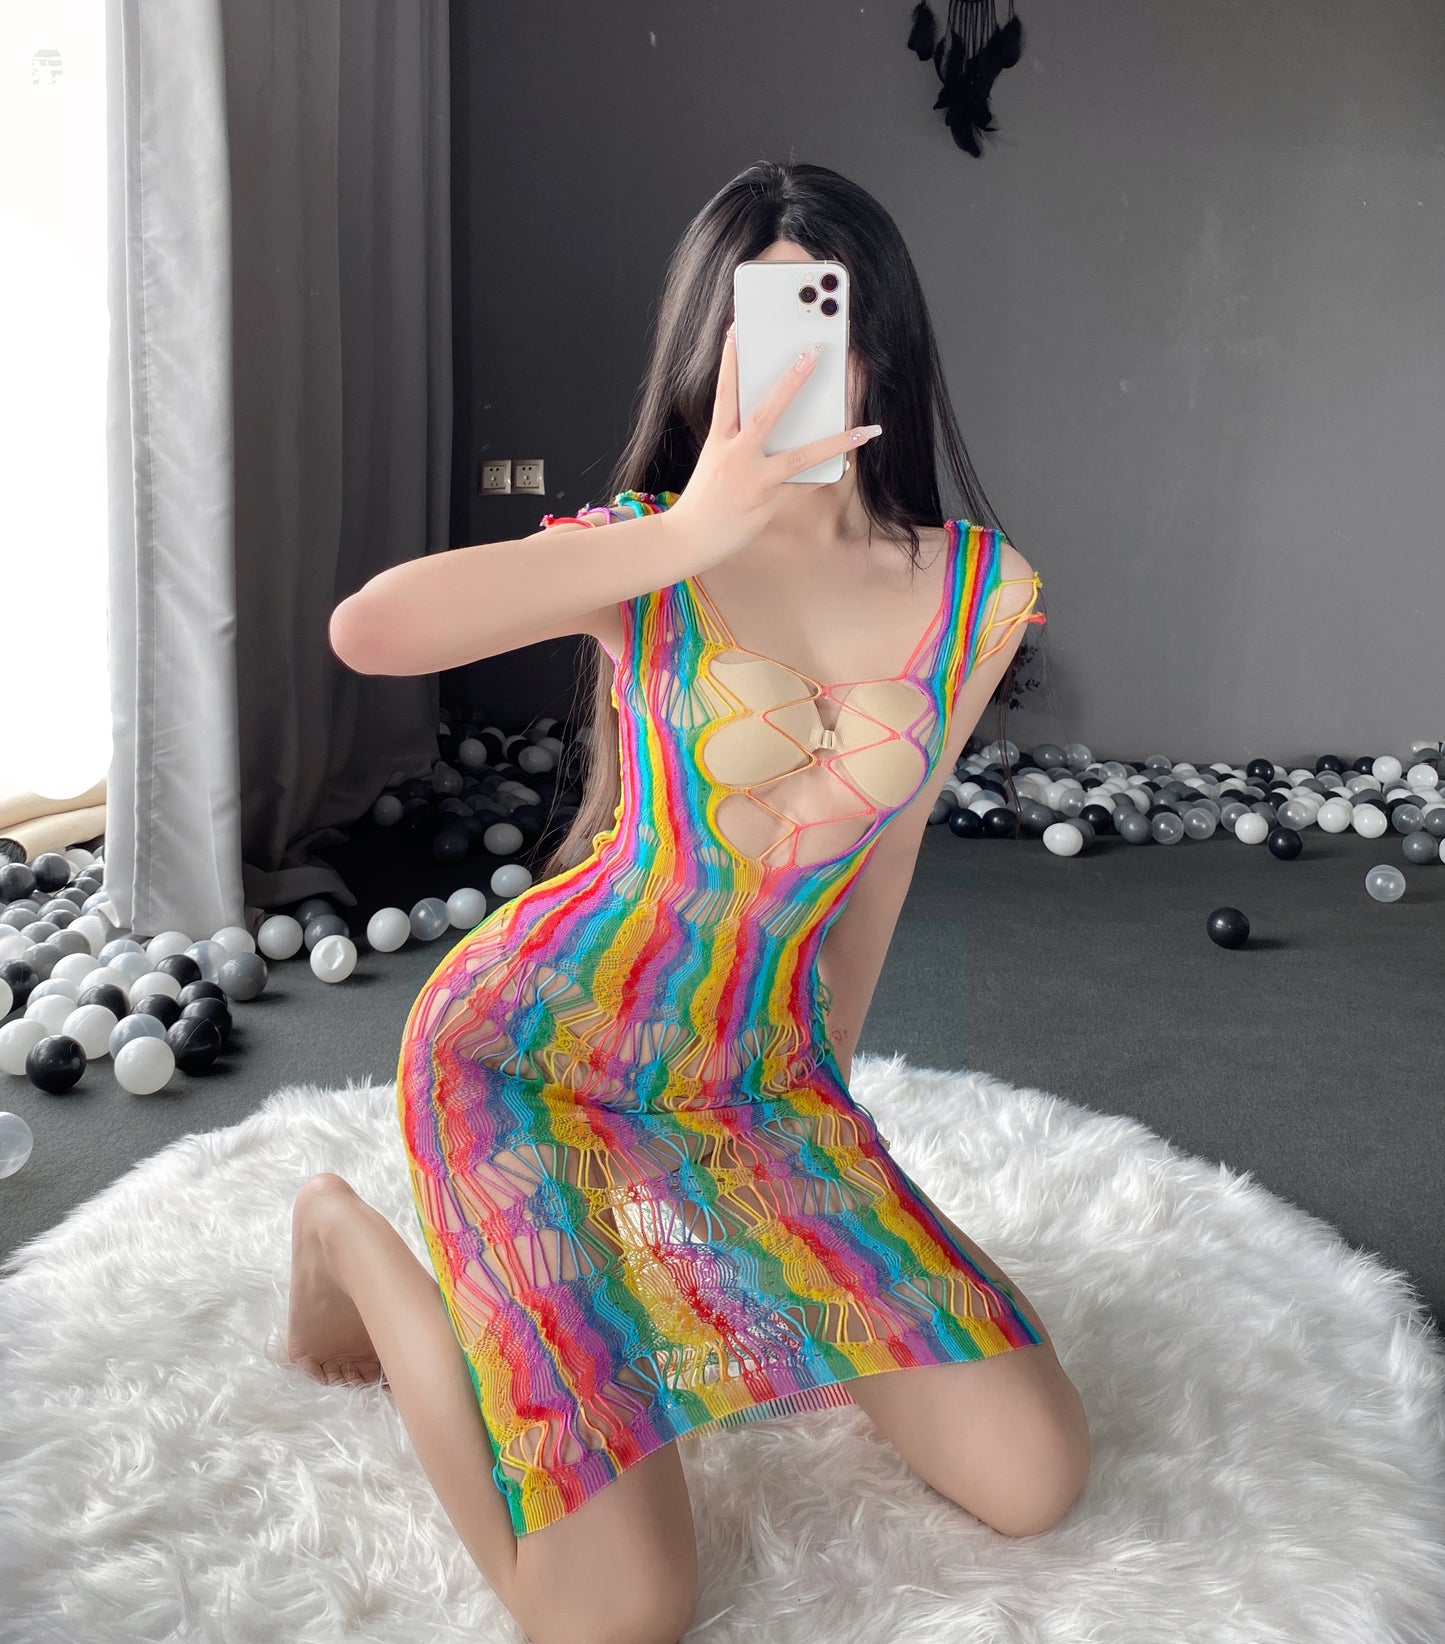 Rainbow skirt V1 彩虹渔网连体衣V1 1430